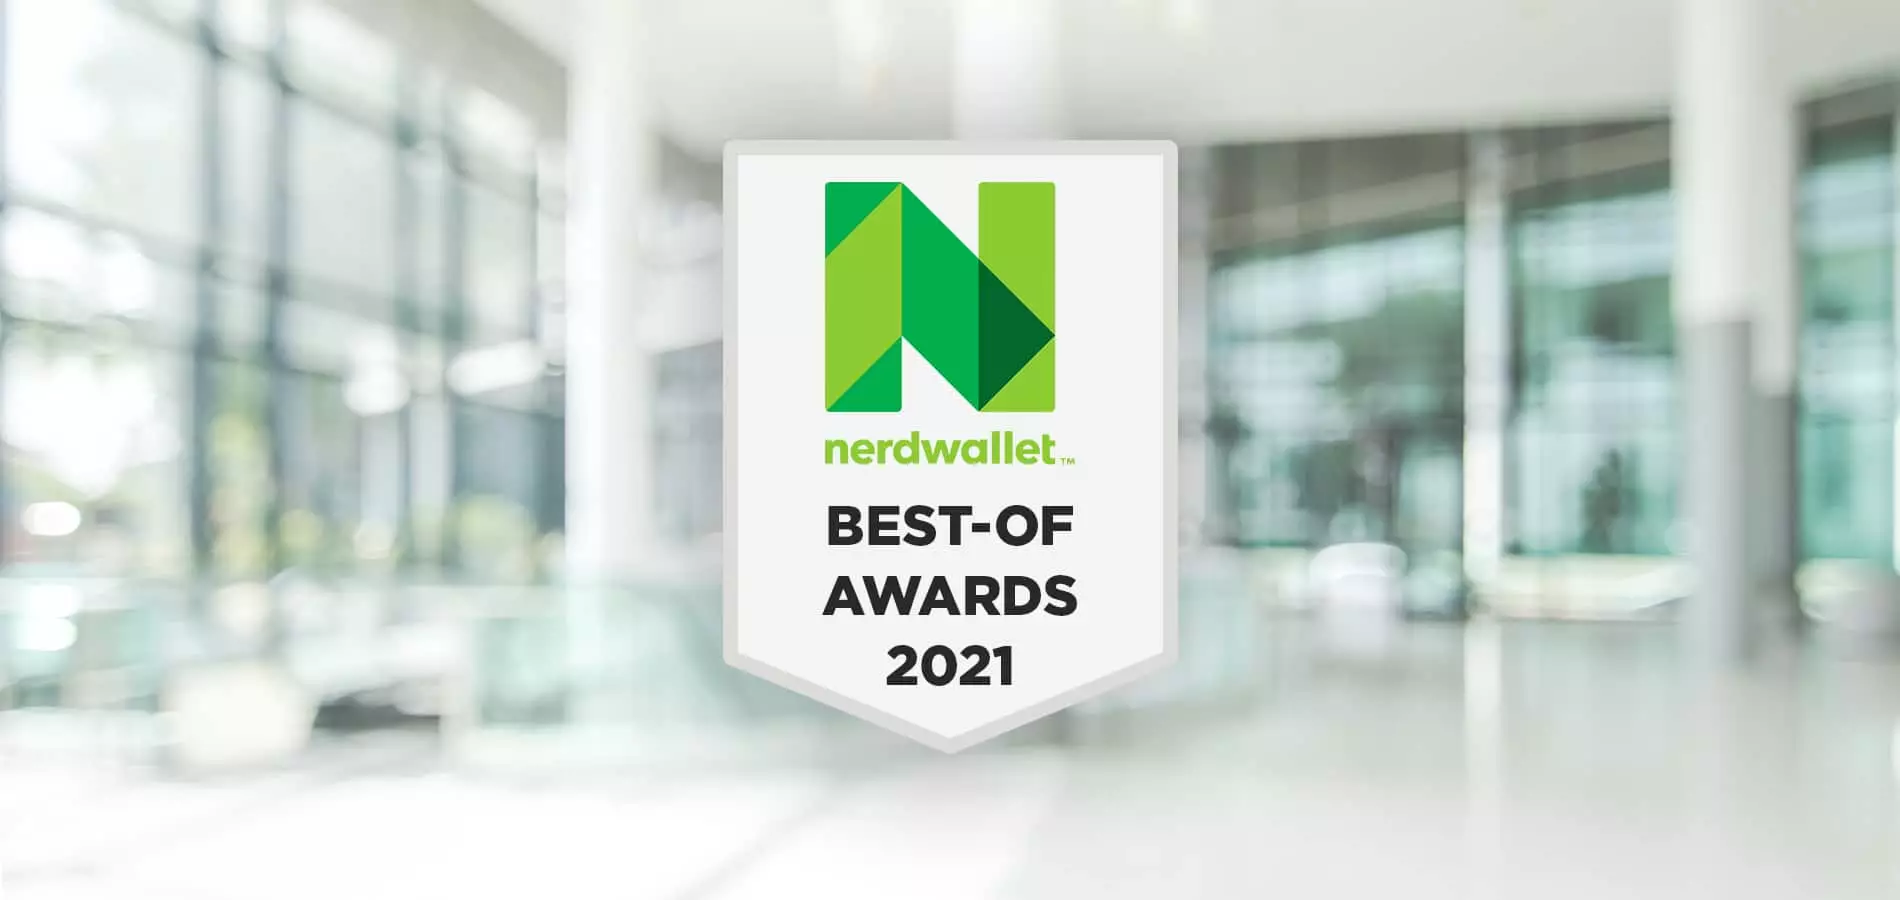 NerdWallet Best-Of Awards 2021